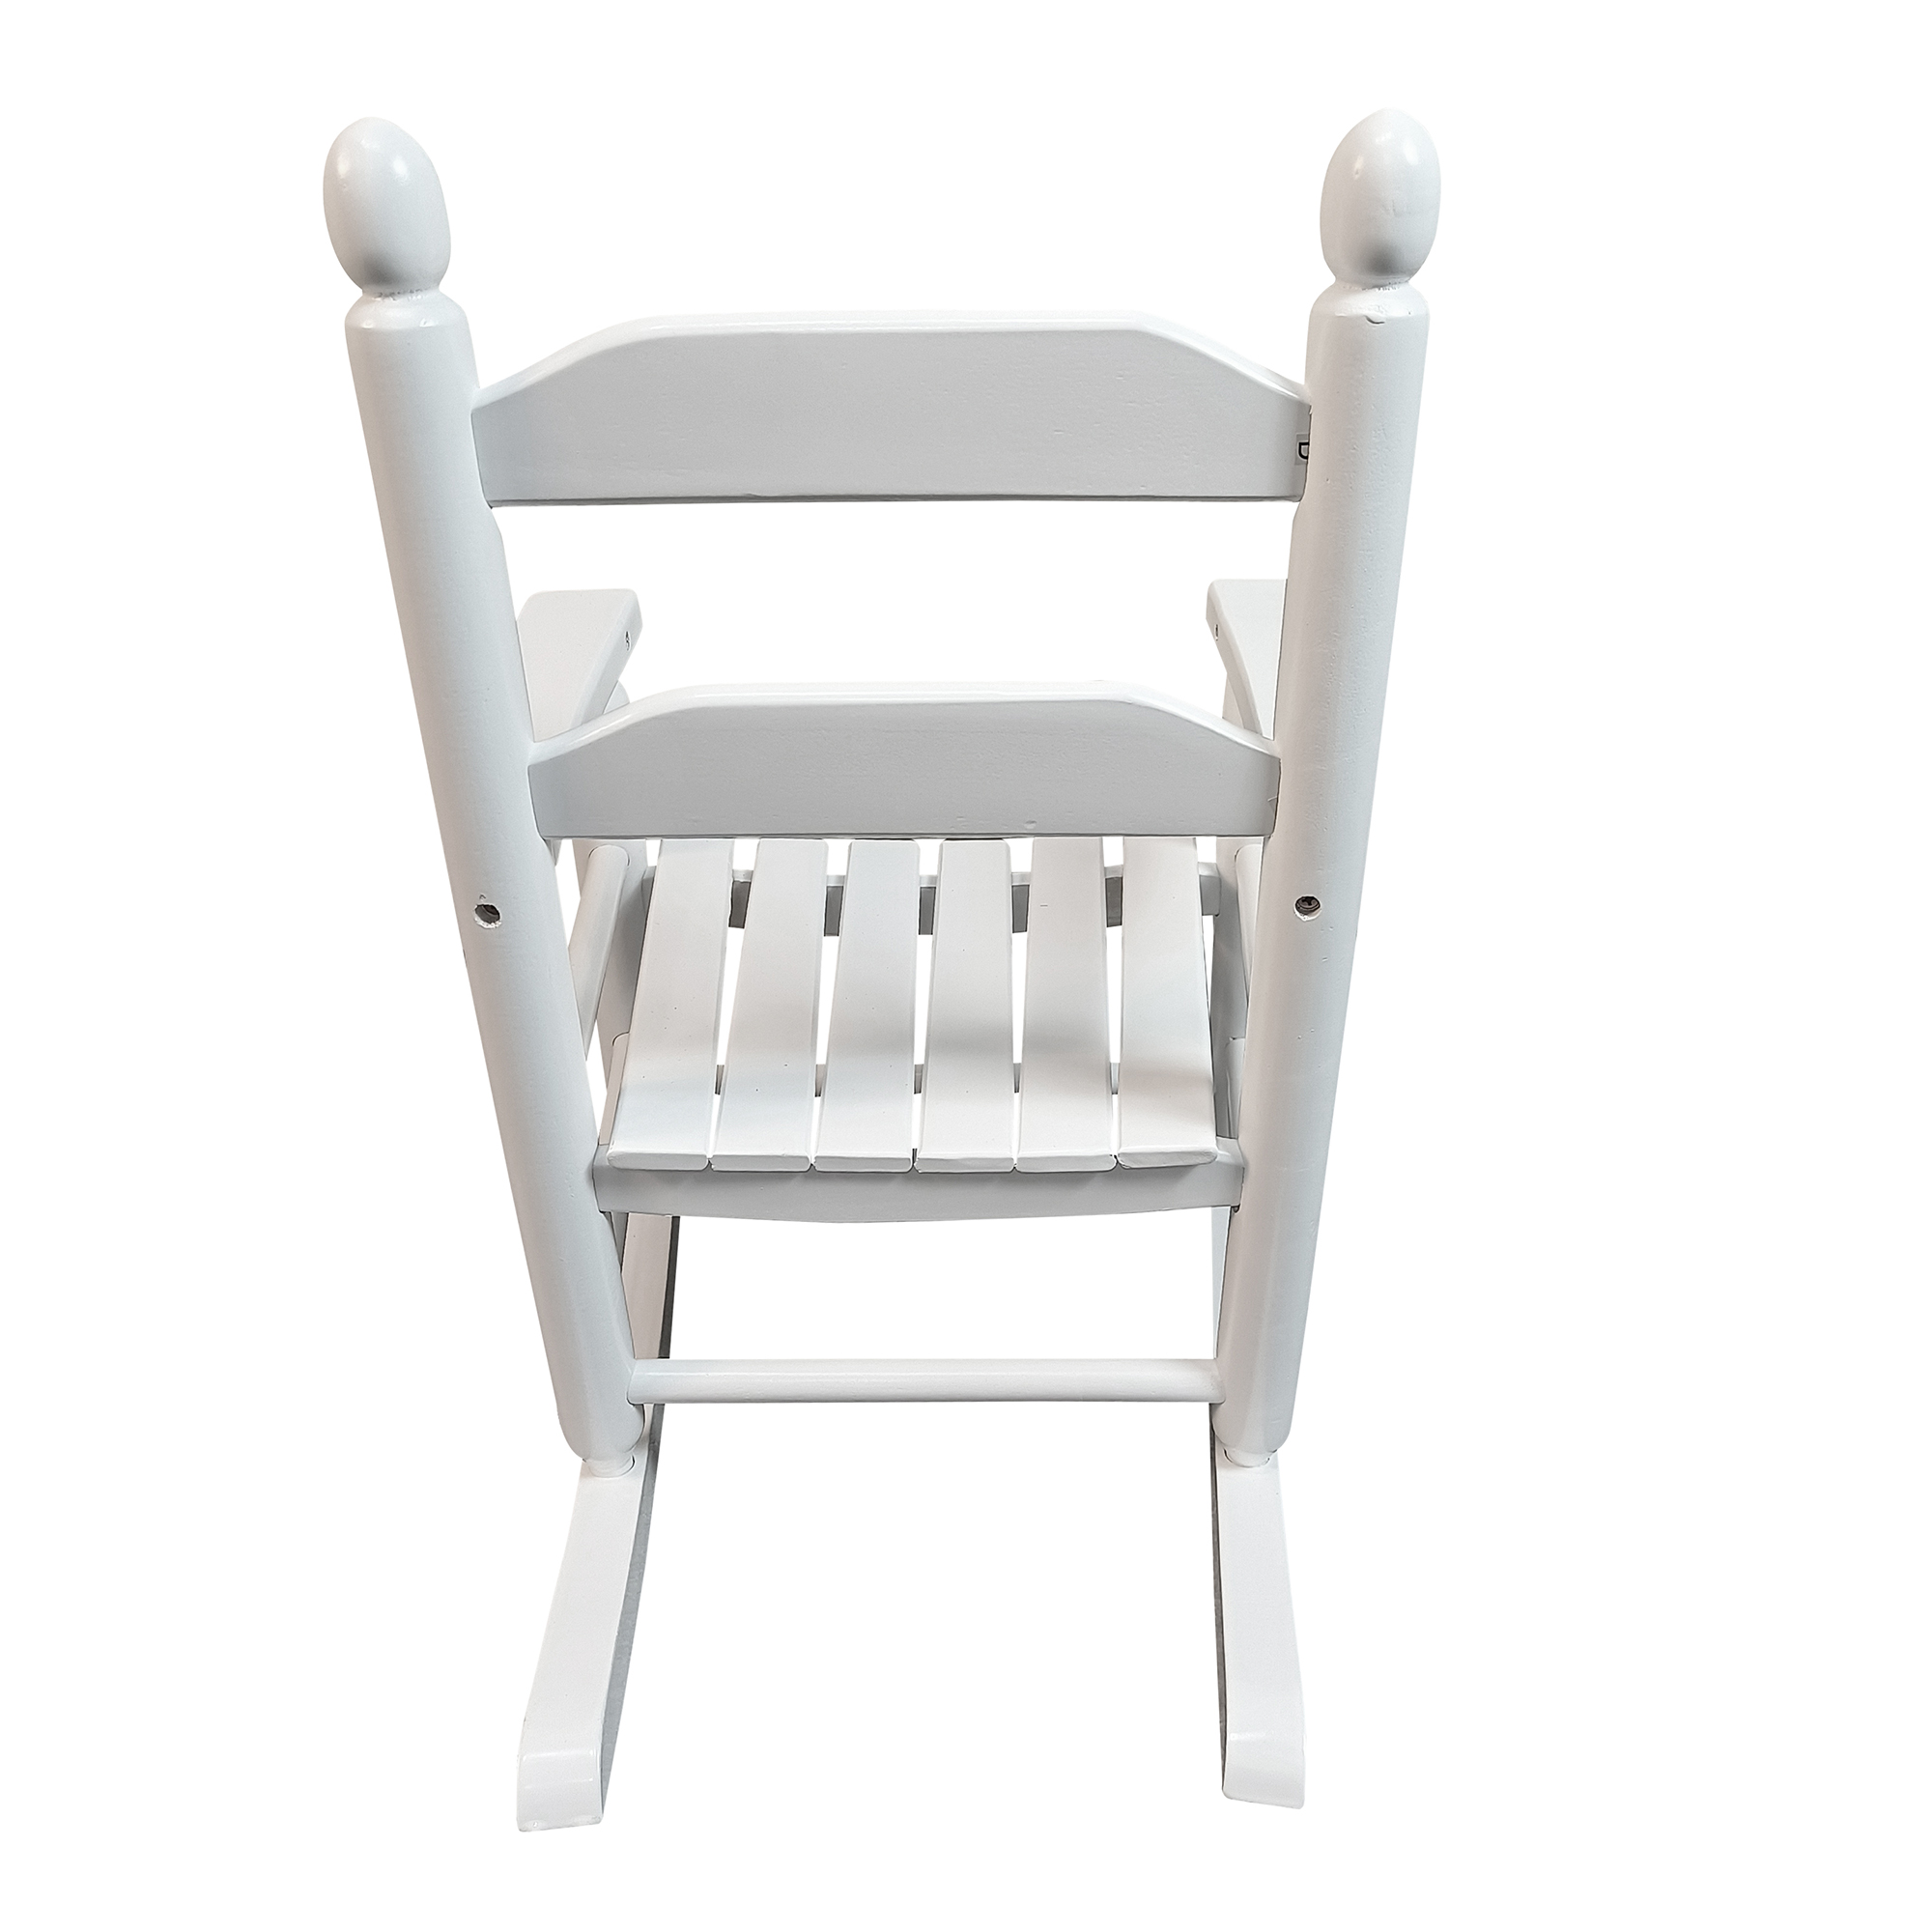 Garden Wooden Furniture Child Rocking Chair, Porch Rocking Chair with Handrail, Oak - image 5 of 7